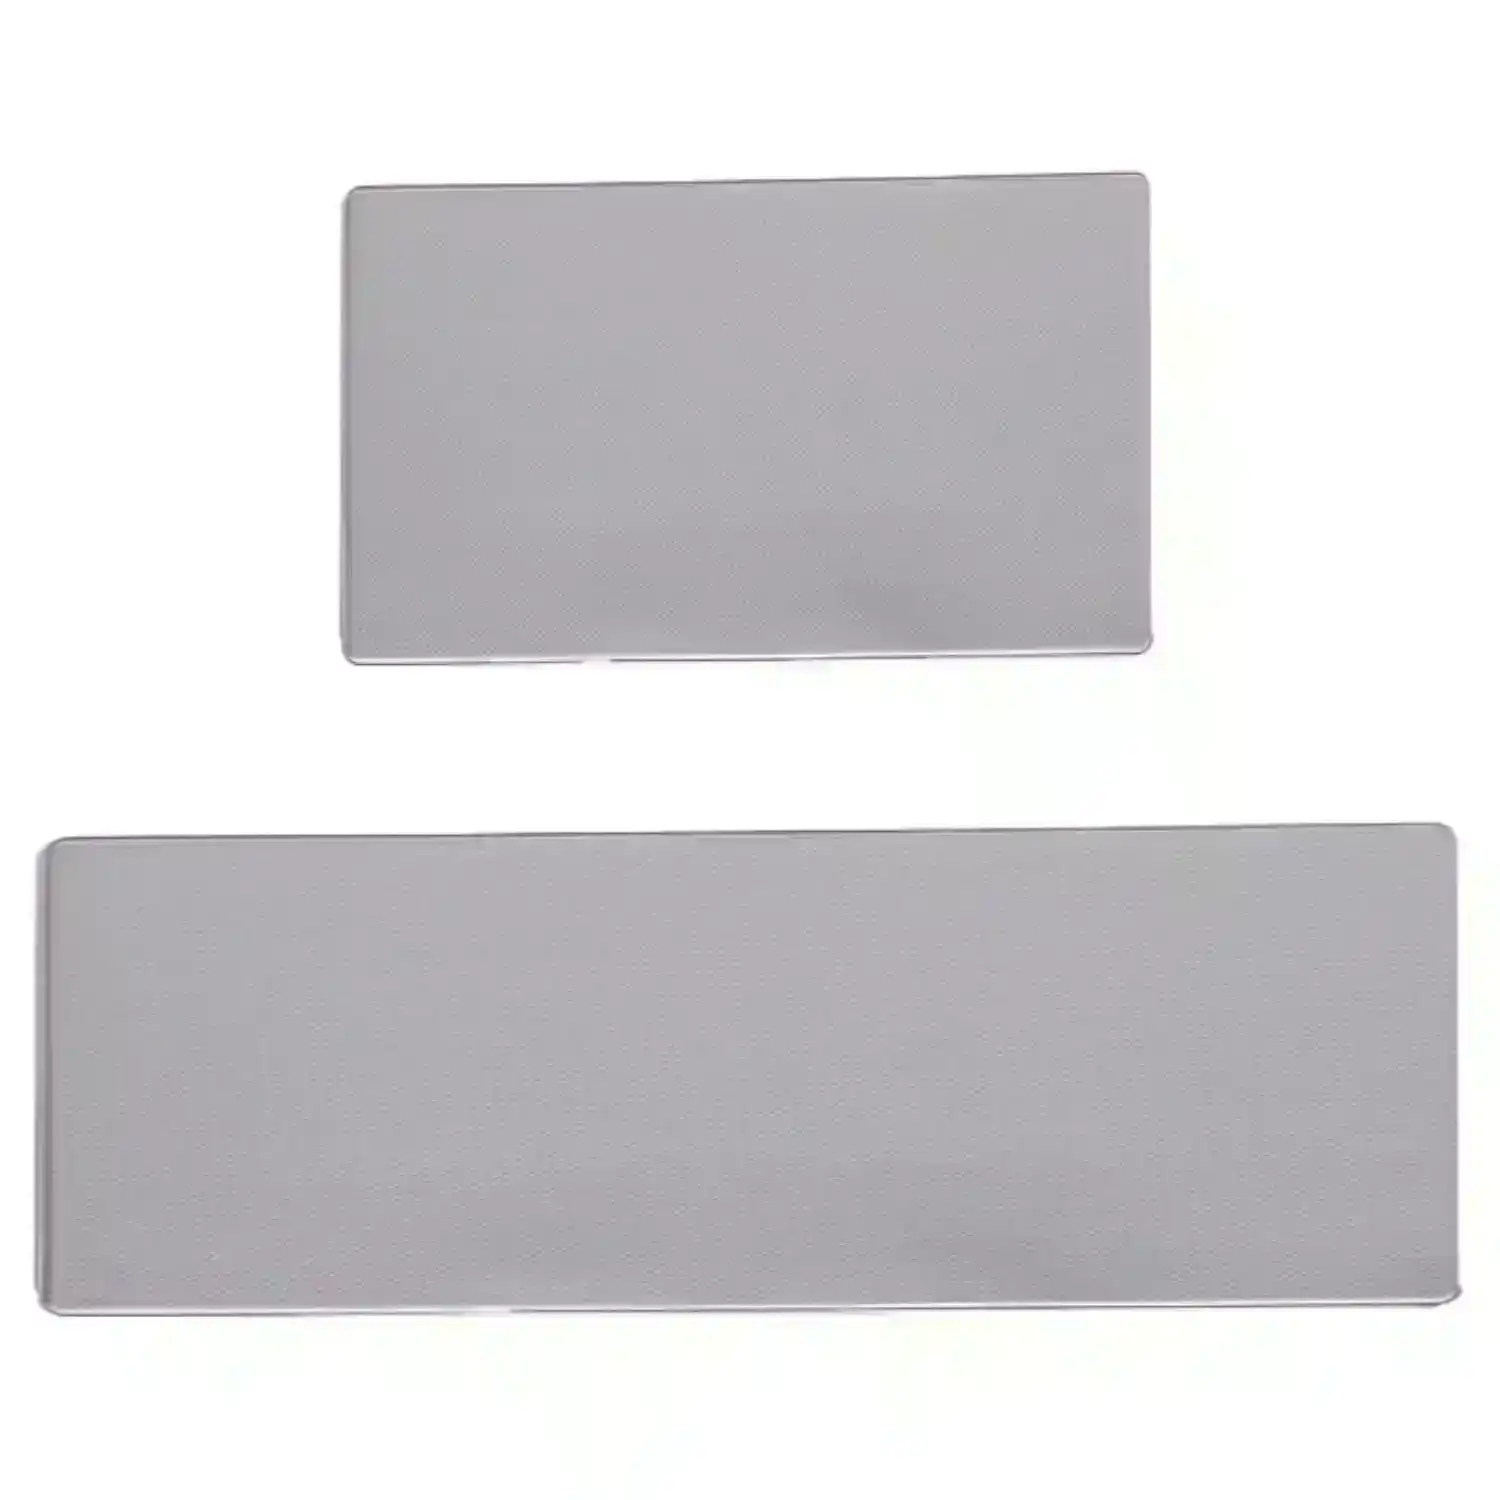 Gominimo PVC Non-Slip Waterproof Kitchen Floor Rug Mat 2pcs Set Grey